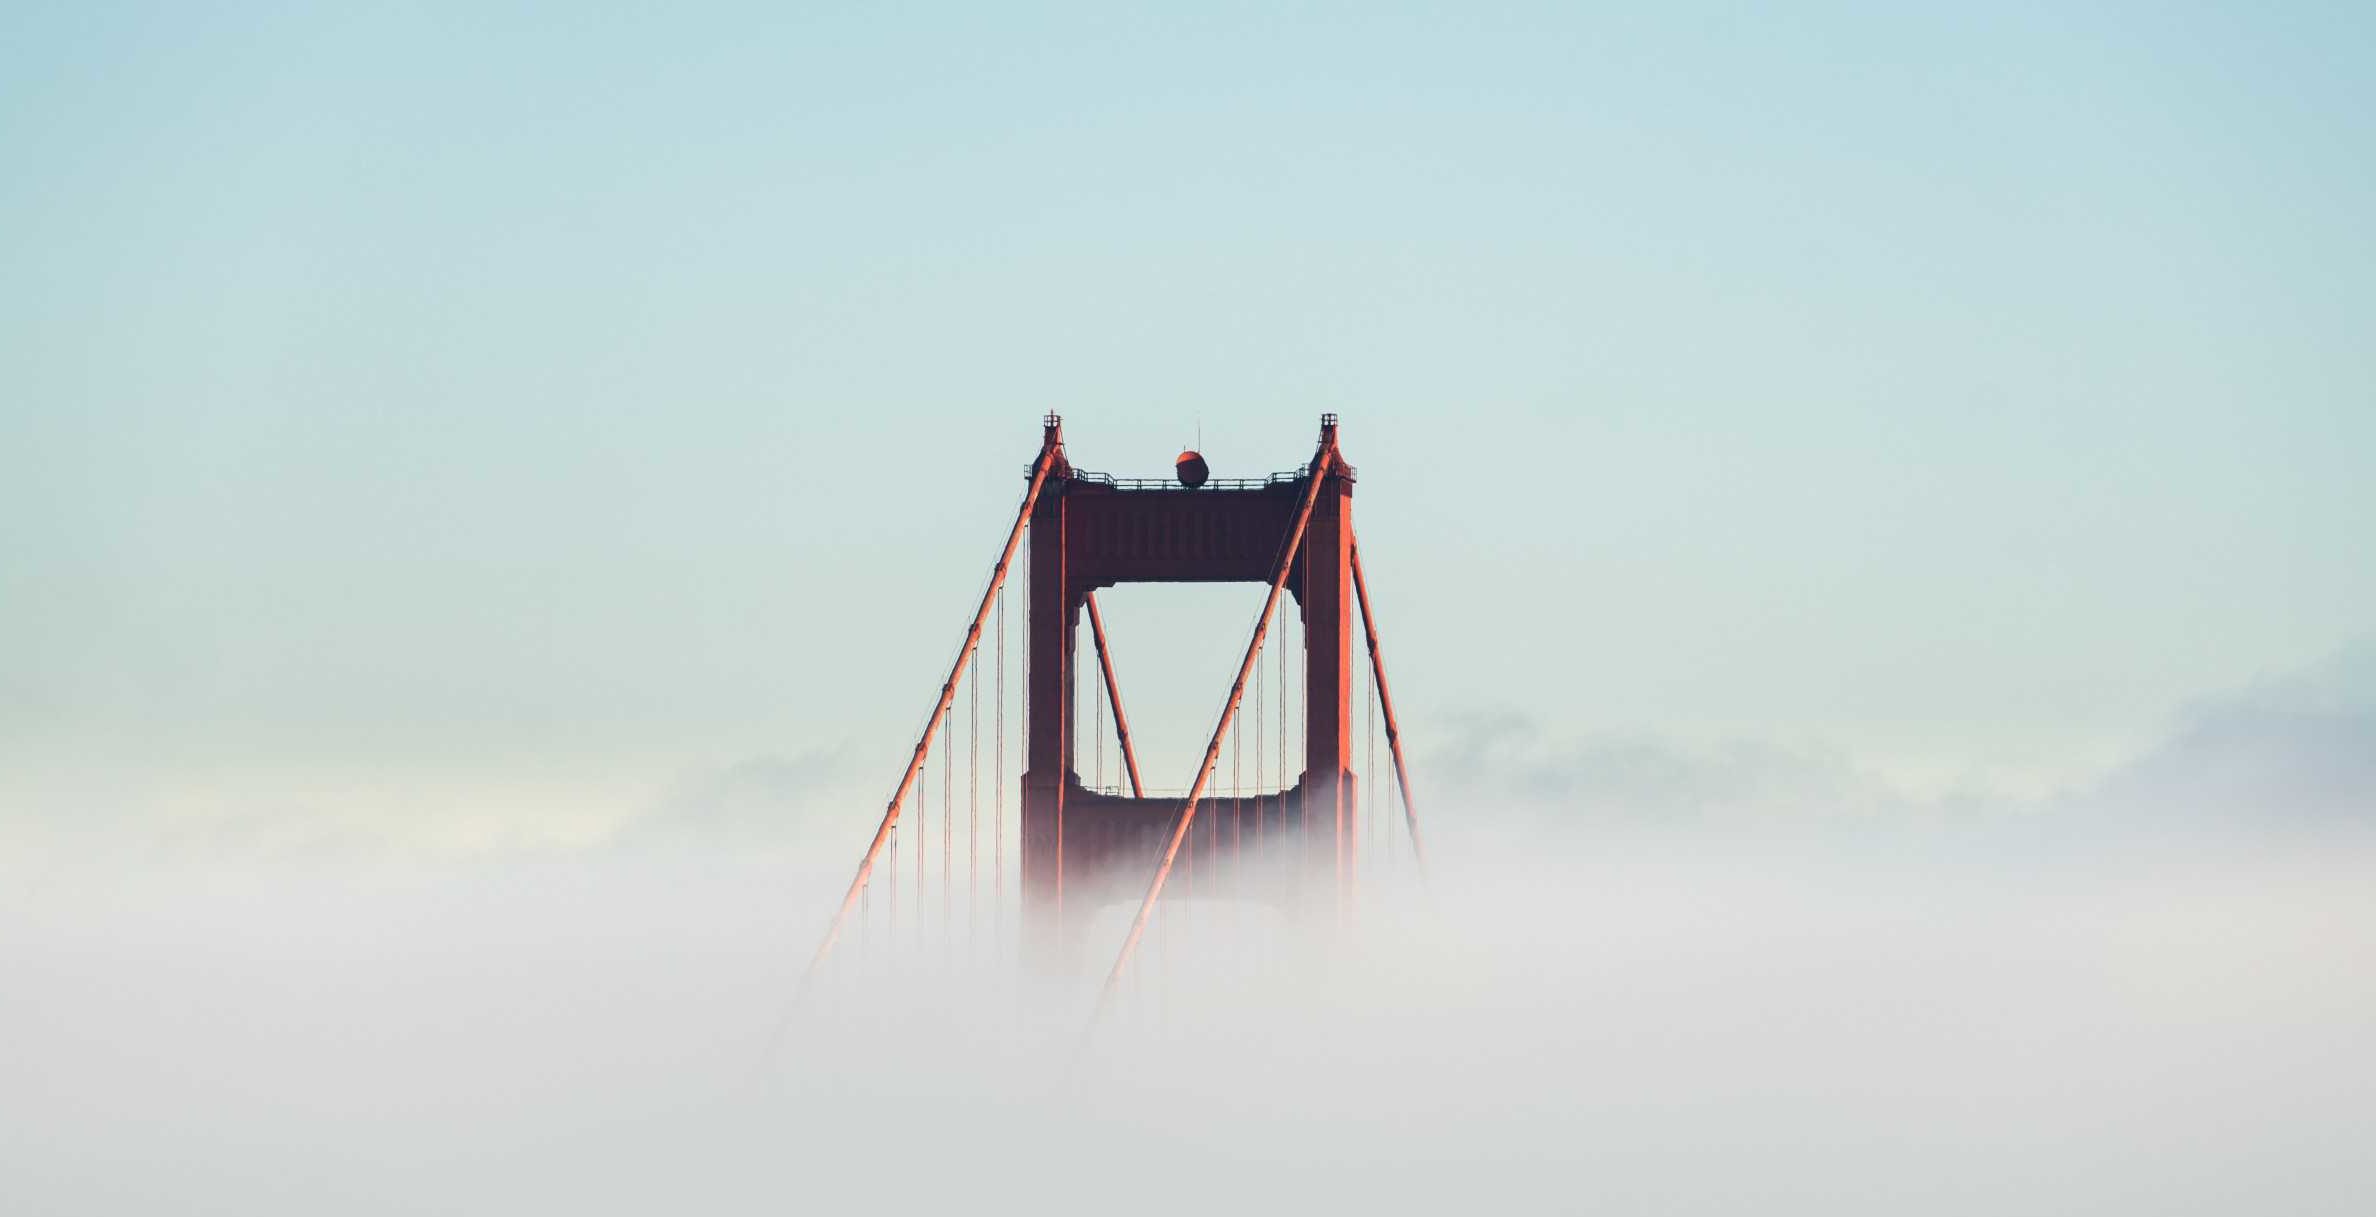 Golden Gate Bridge disappearing in the san francisco fog